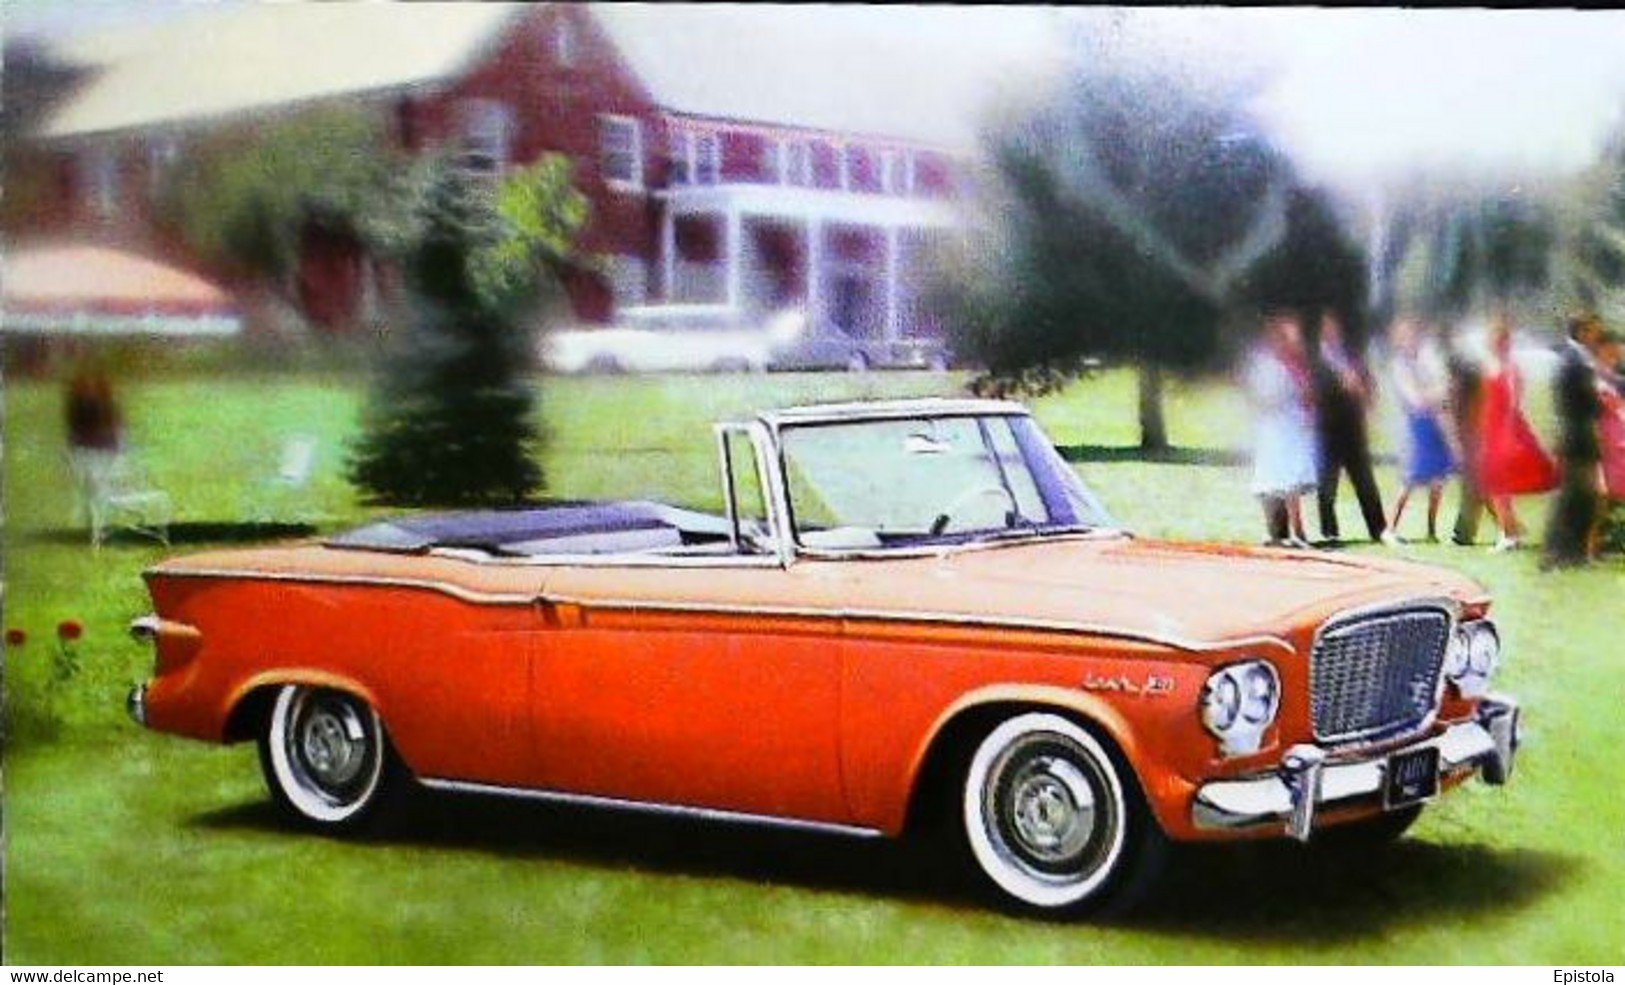 ► STUDEBAKER  LARK Convertible 1960's   - Automobile Publicity    (Litho In U.S.A.) Roadside - American Roadside